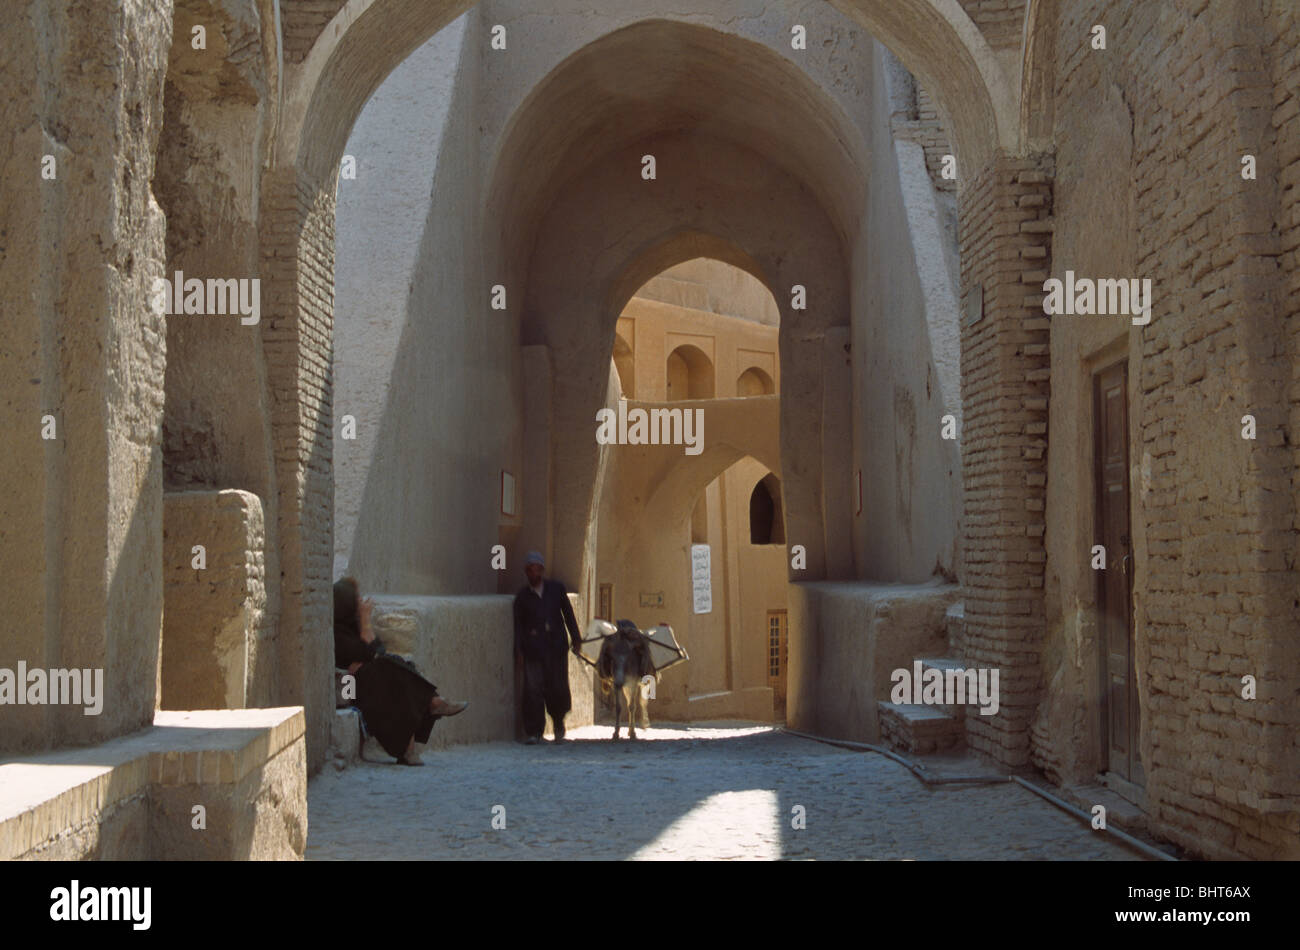 Man with donkey inside ruined citadel of Arg-e Bam, Iran Stock Photo